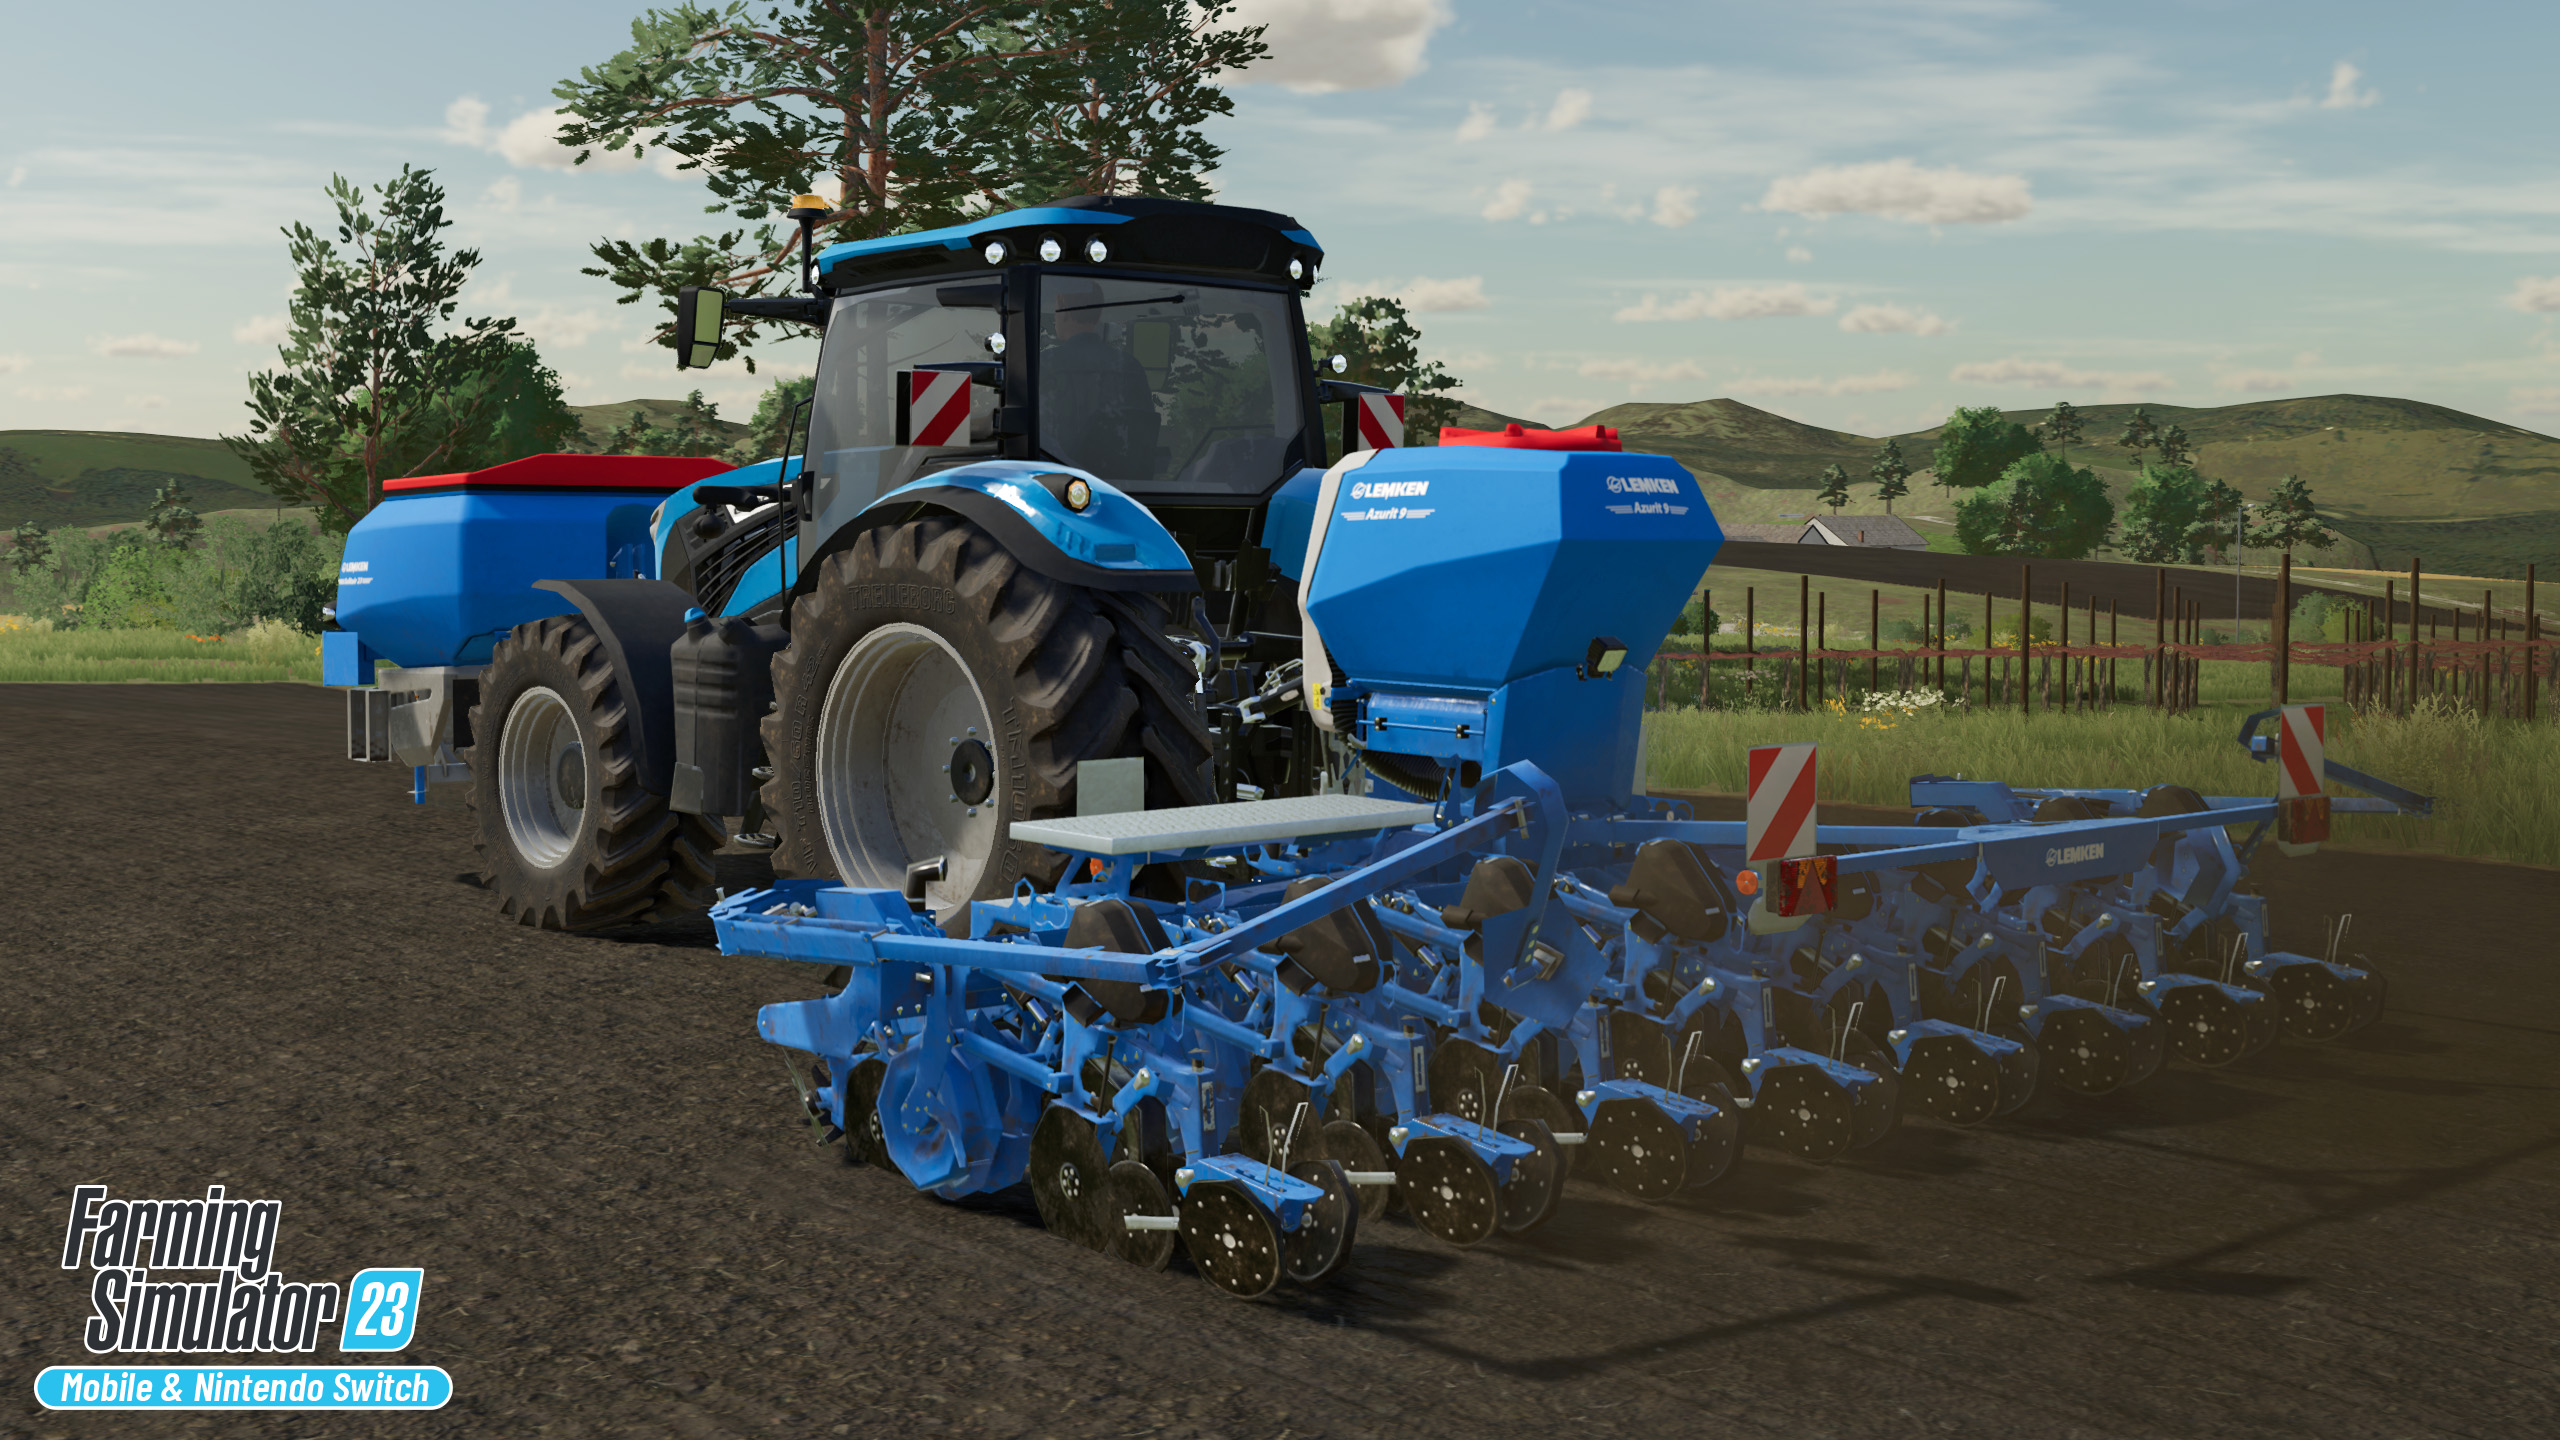 Farming Simulator 23 announced! 